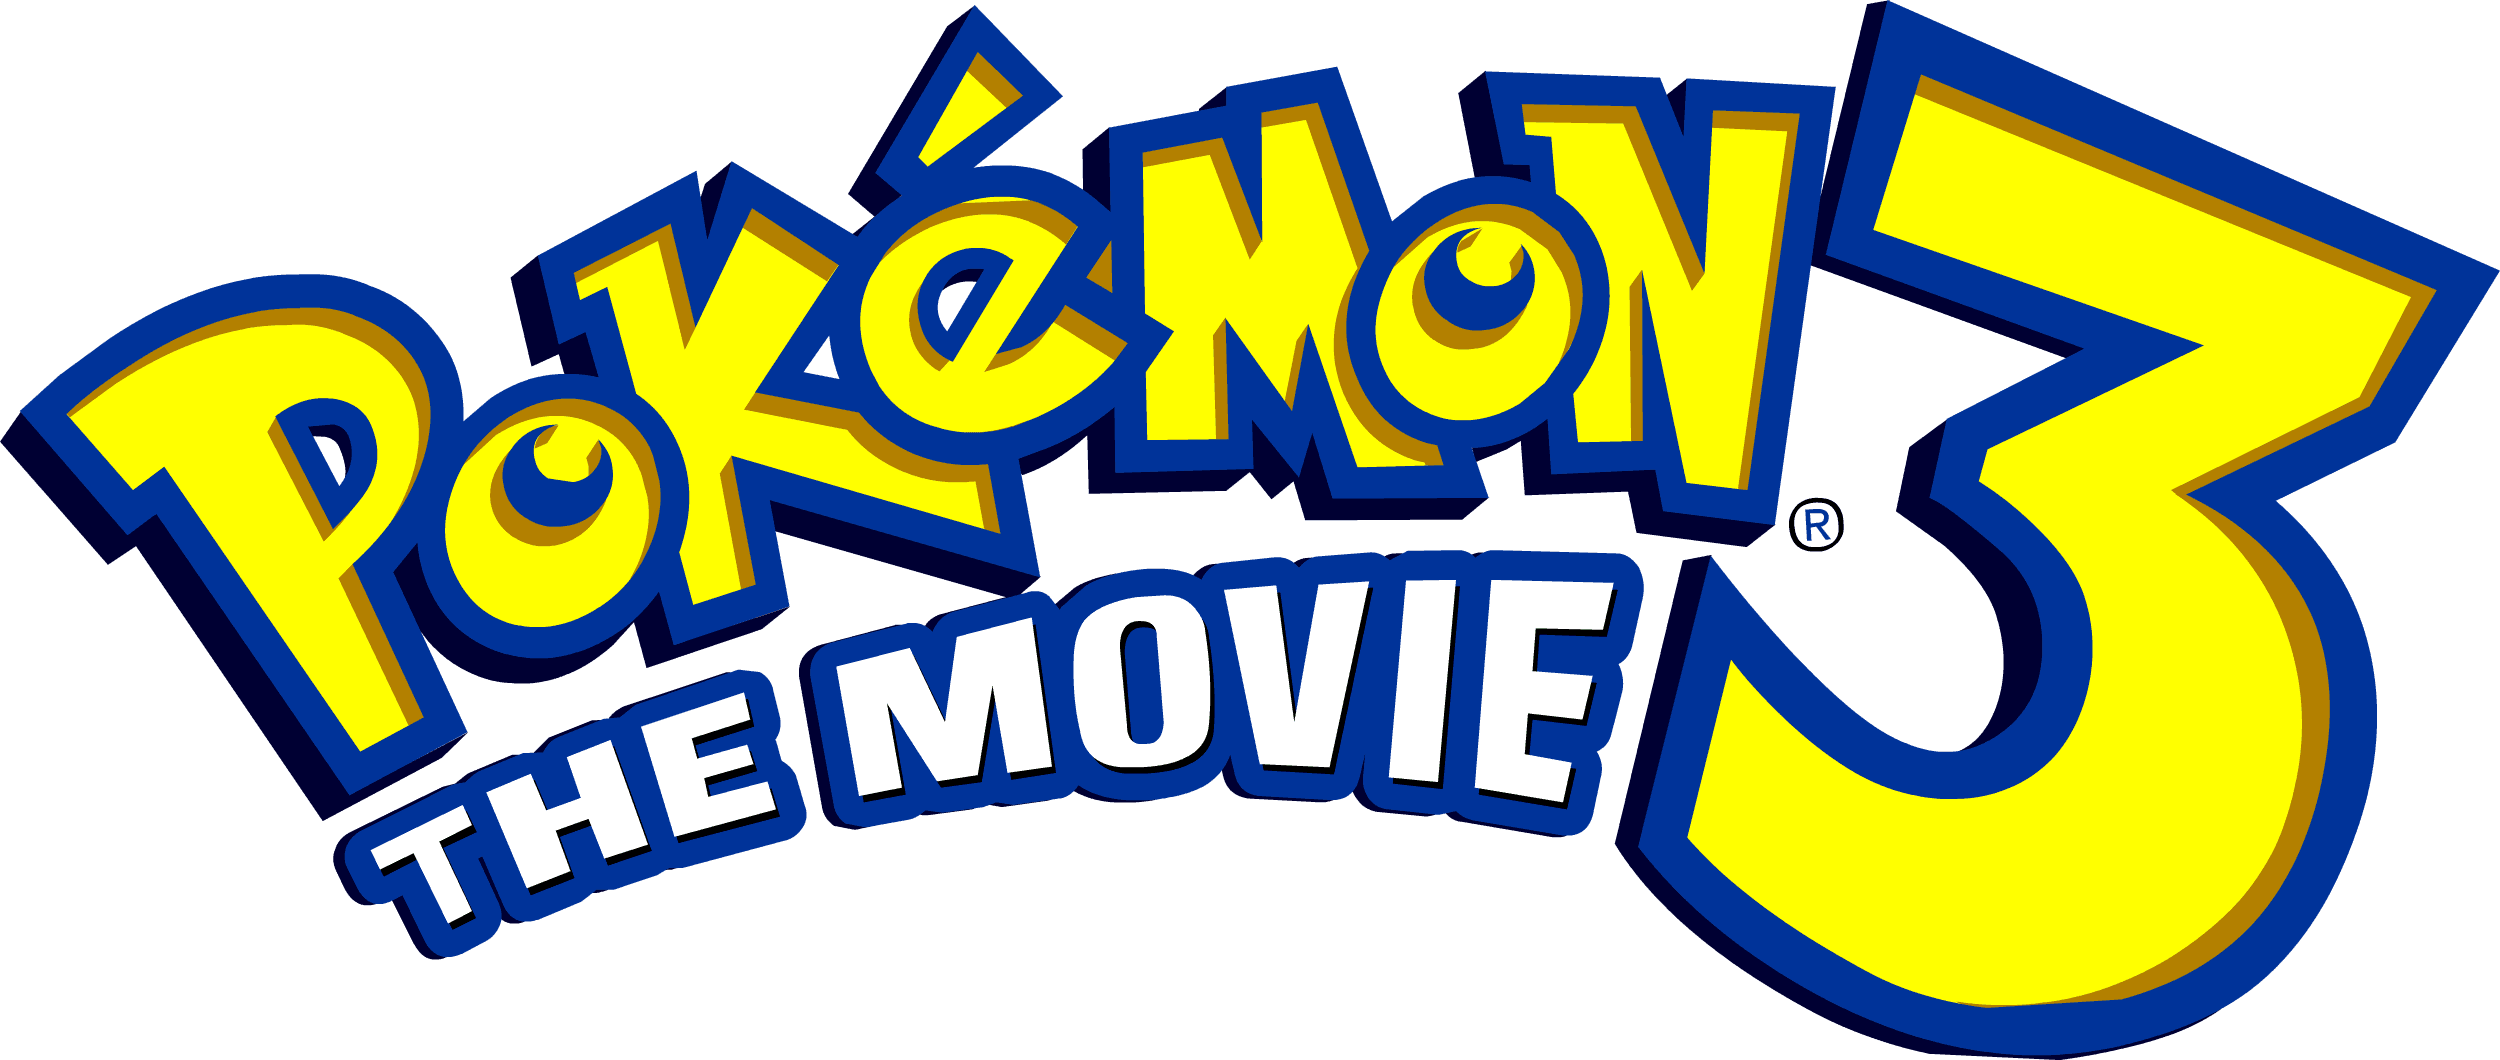 Pokémon 3: The Movie logo